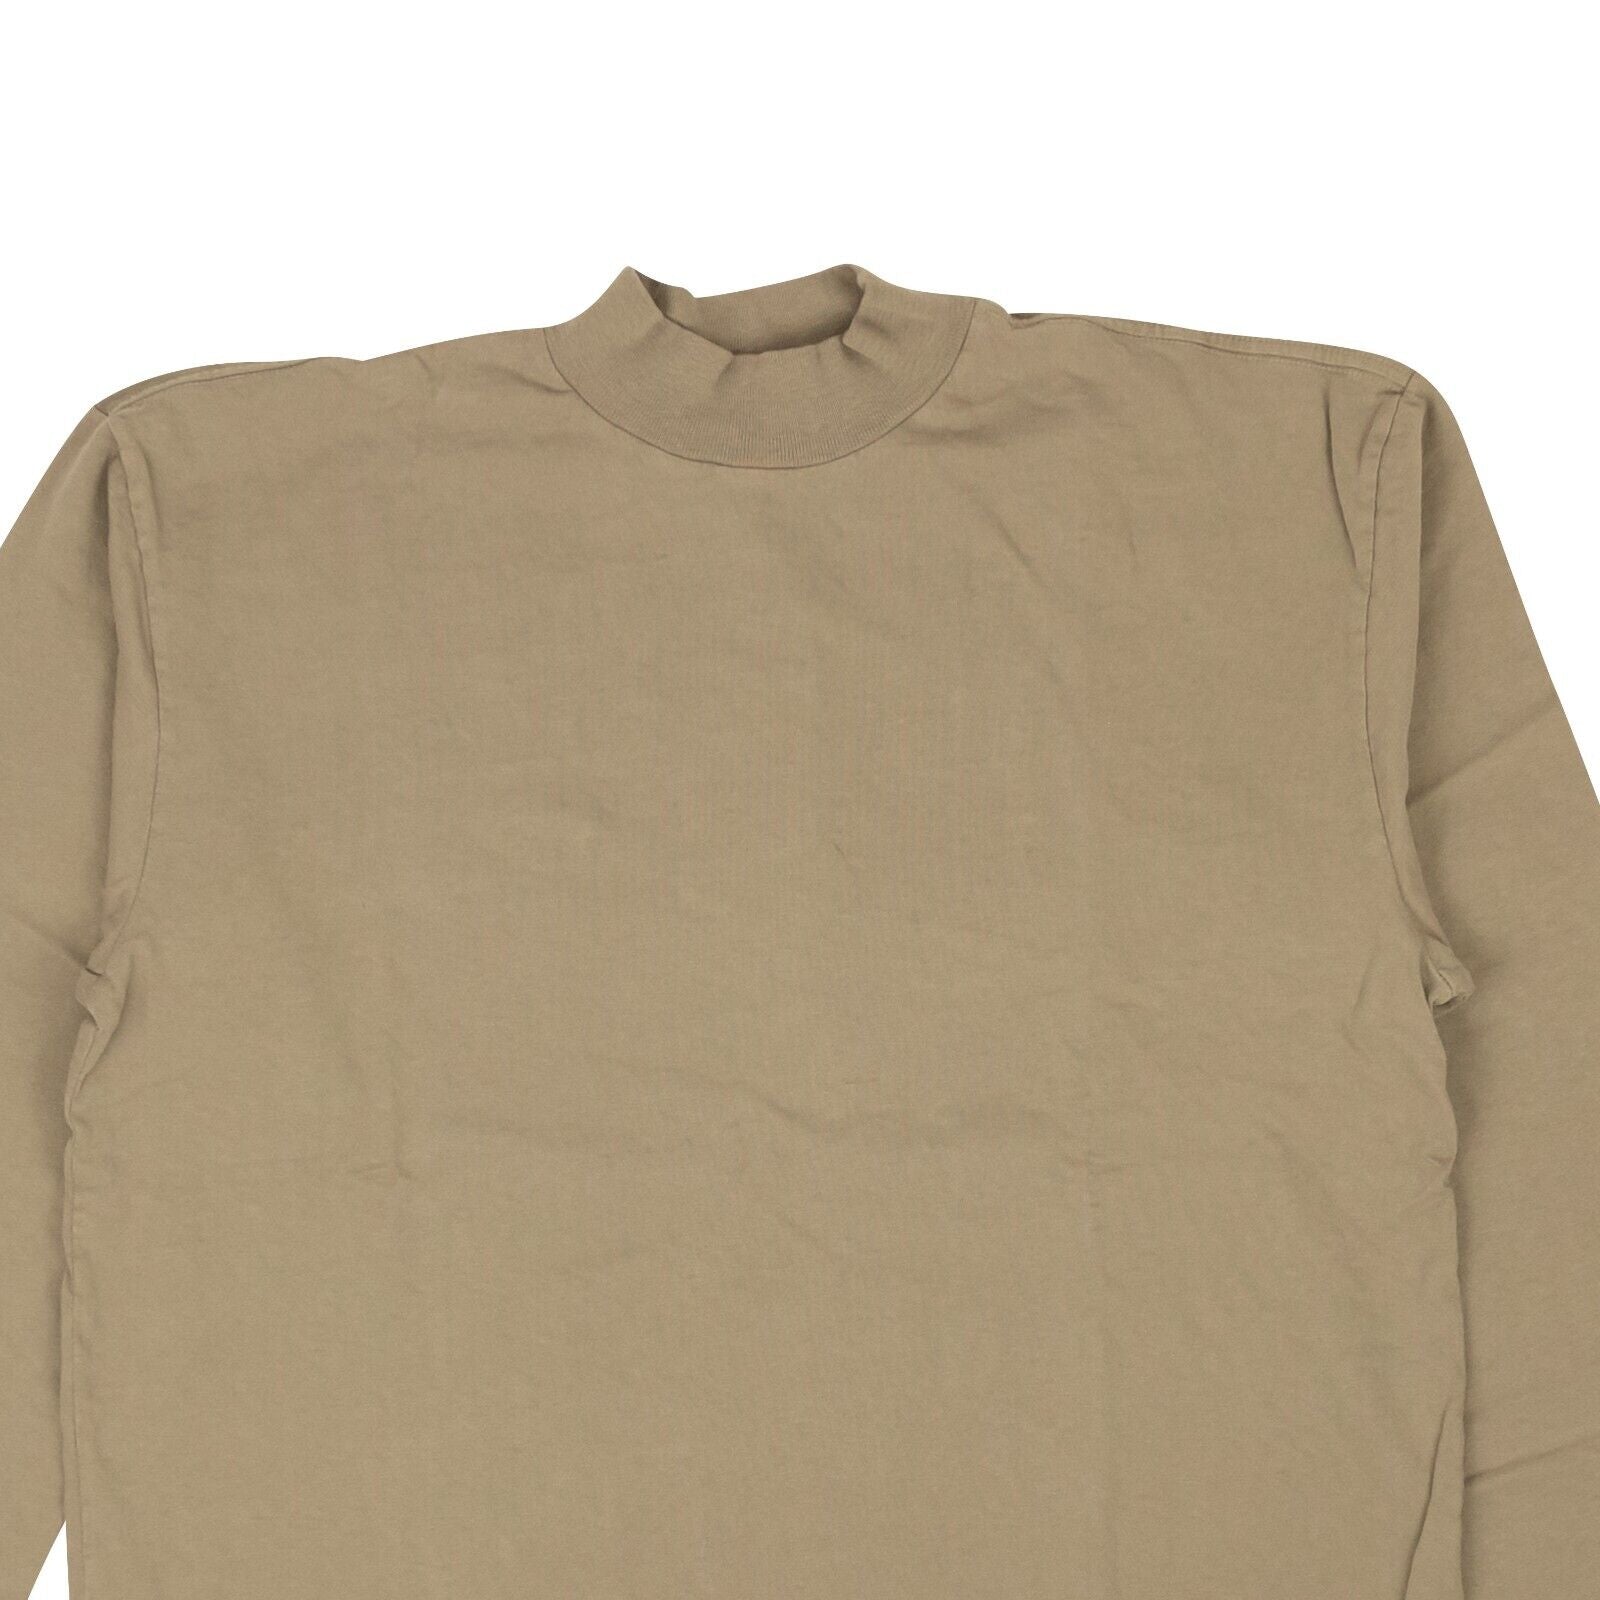 John Elliott Dust Brown Mockneck Long Sleeve T-Shirt XLarge Regular male